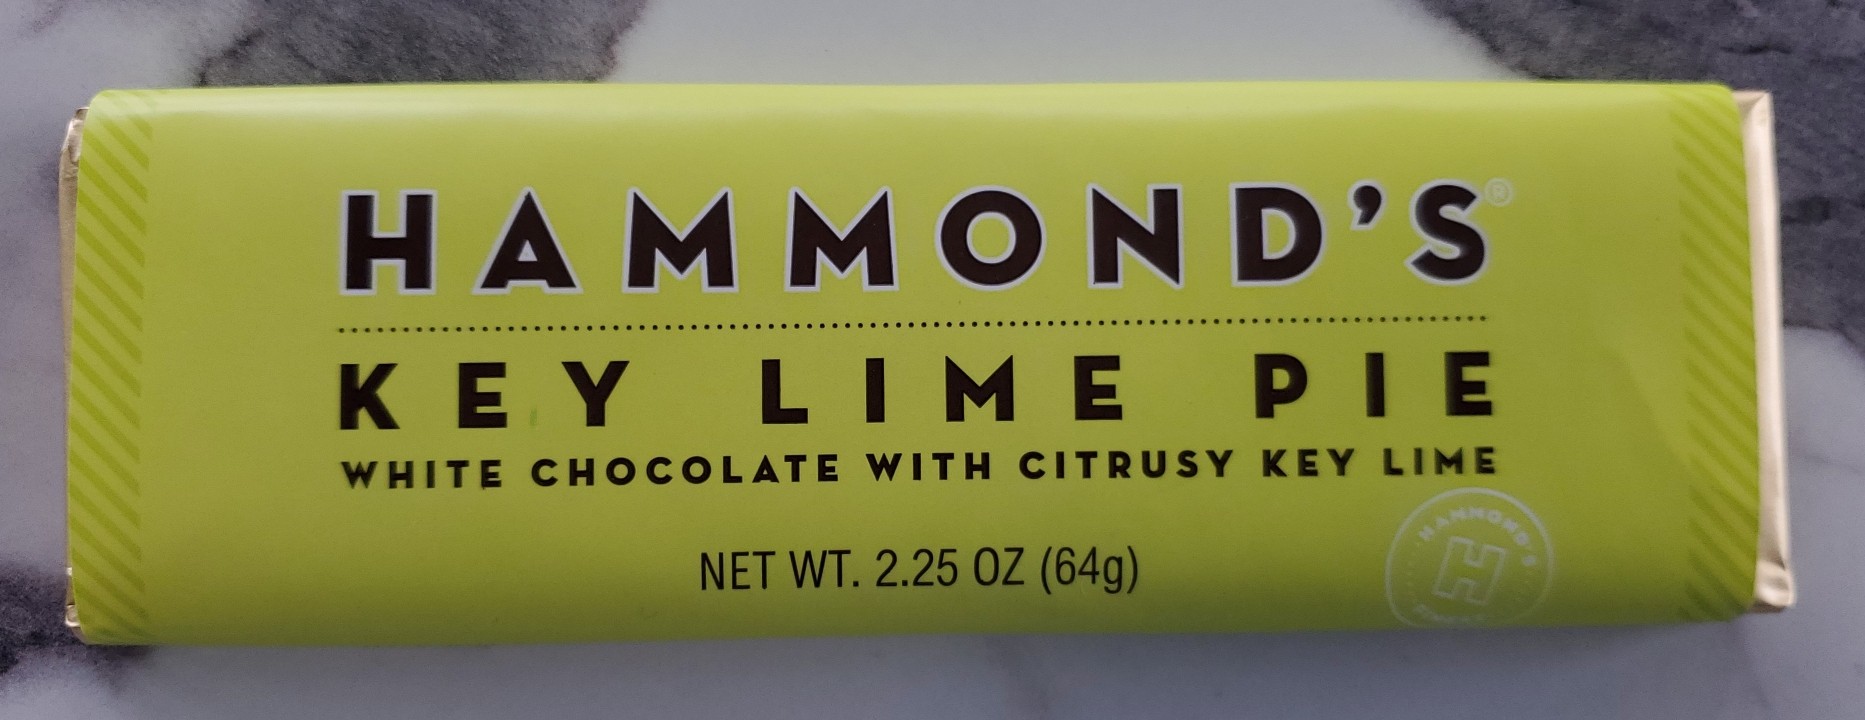 Hammond's Key Lime Pie